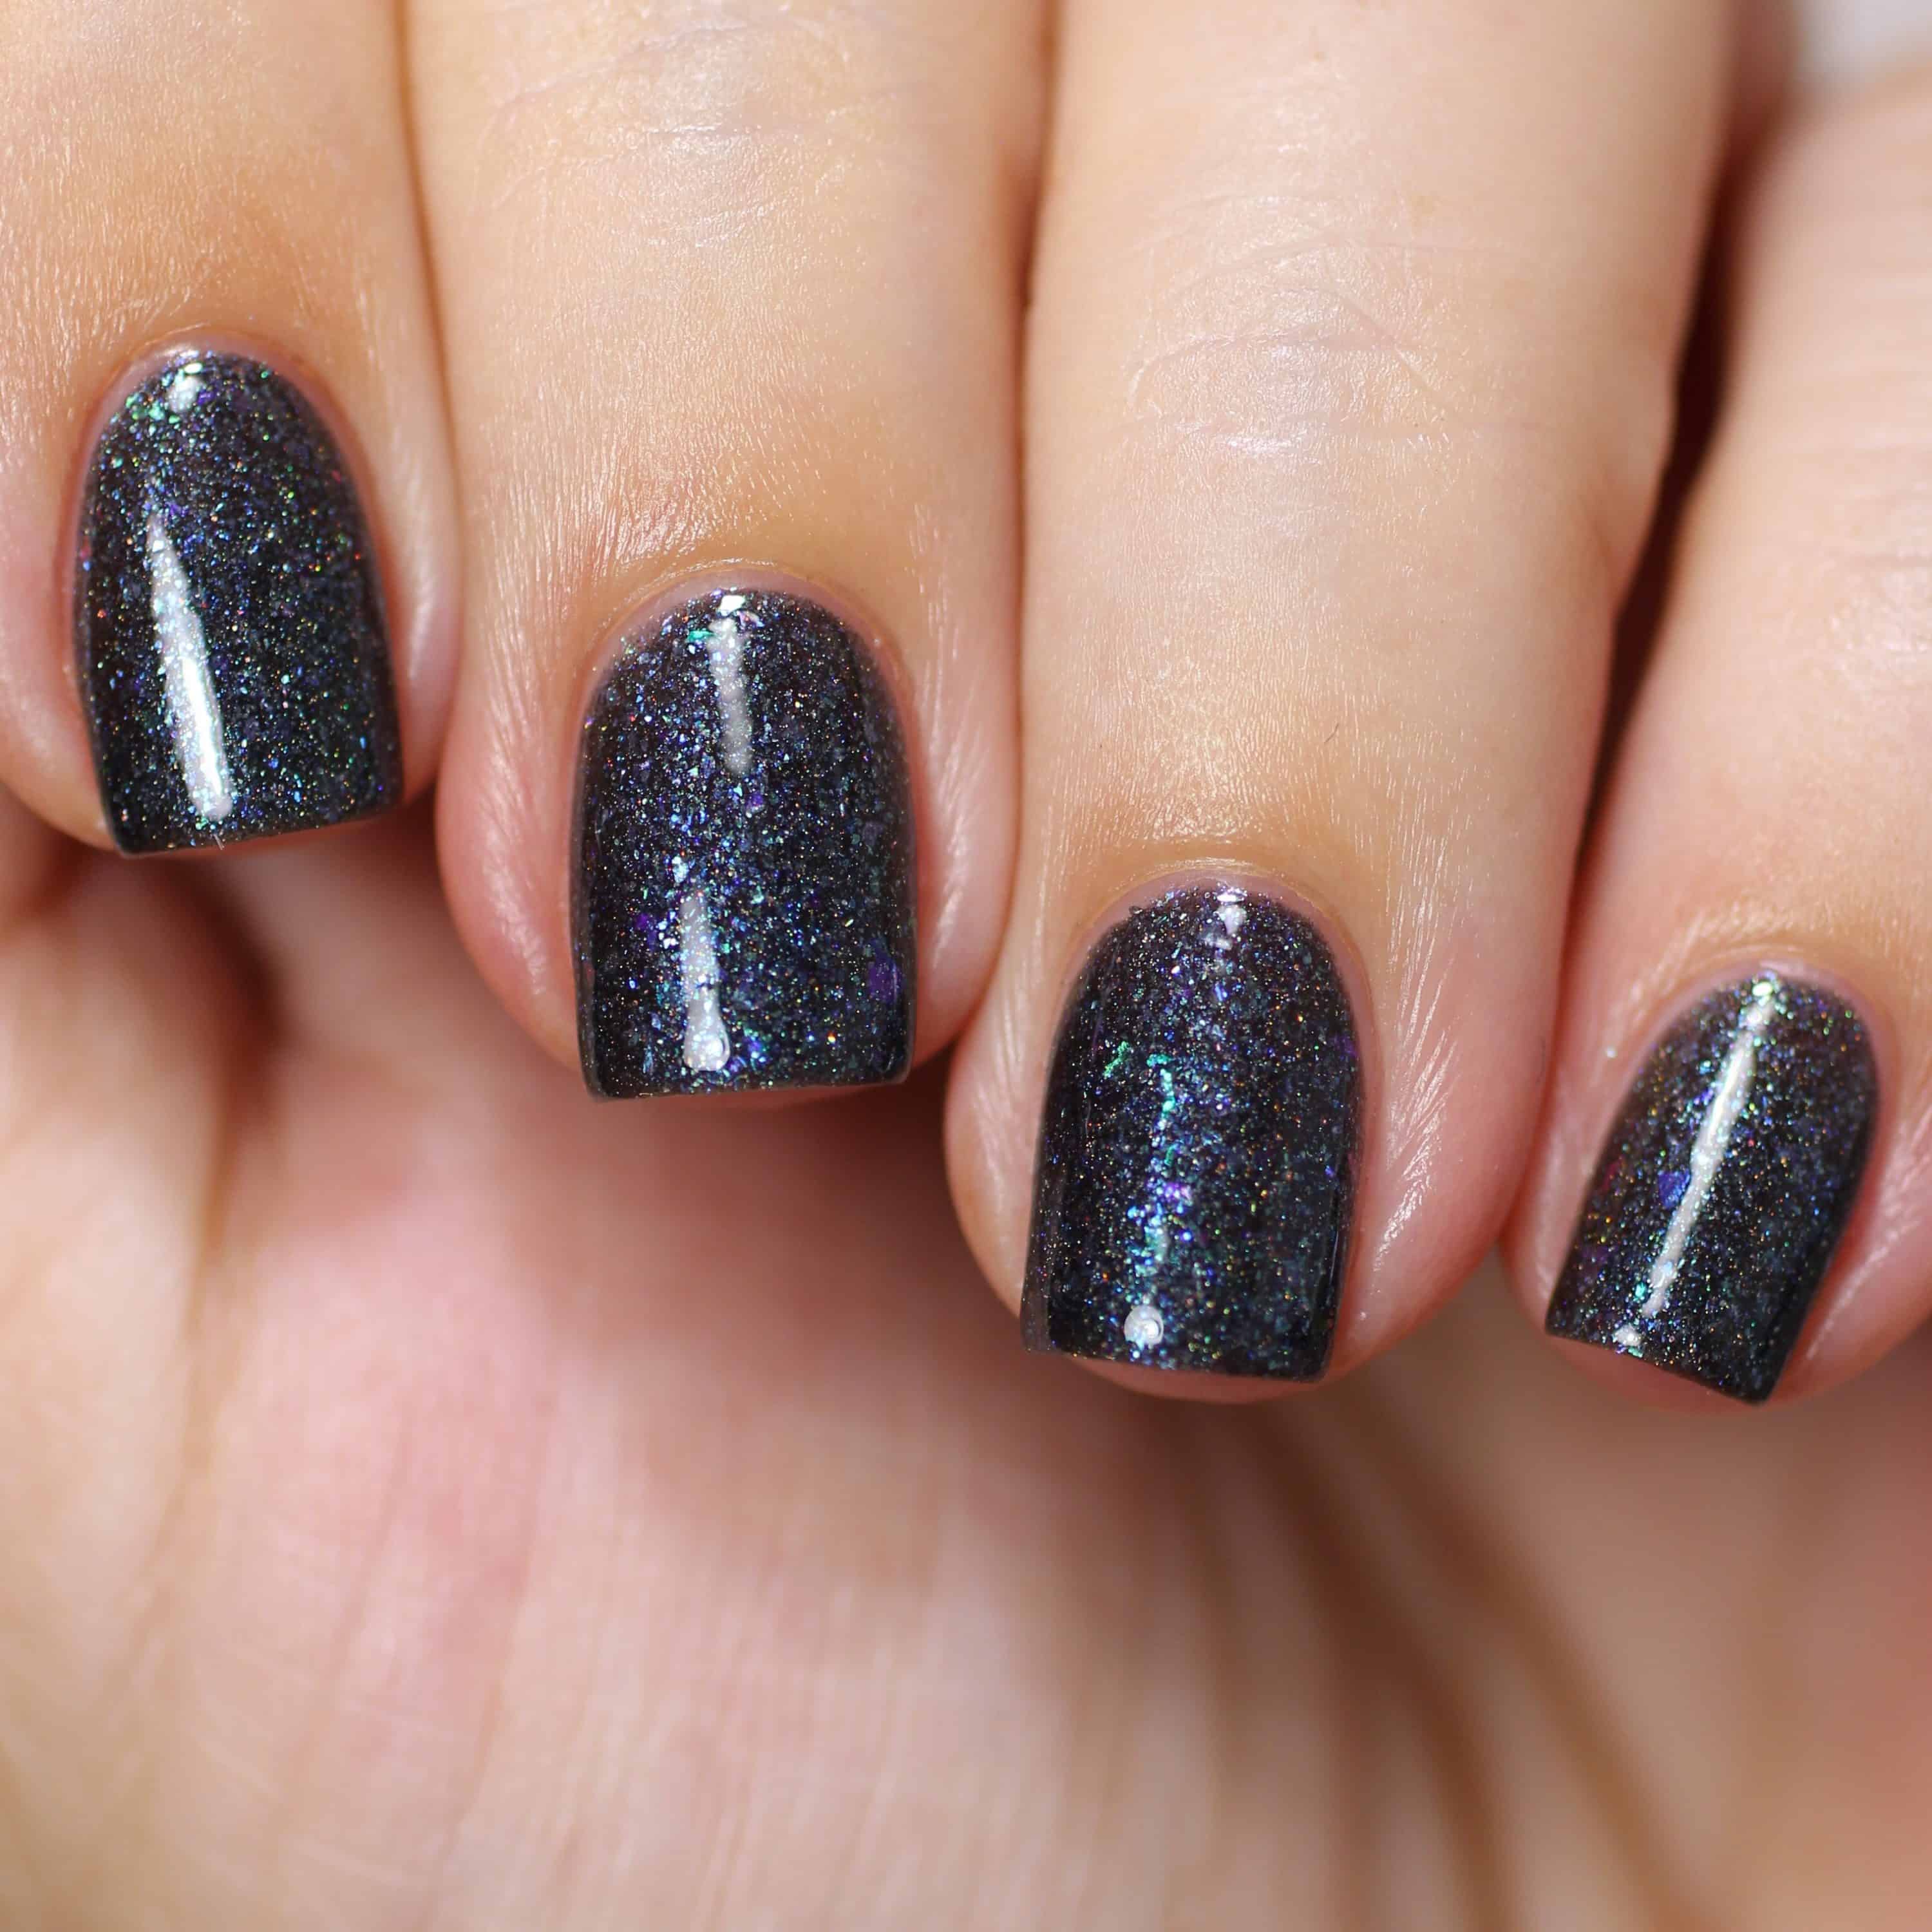 Black Nail Polish With Iridescent Glitter And Shimmer | Squoval nails, Nail  polish, Black nails with glitter